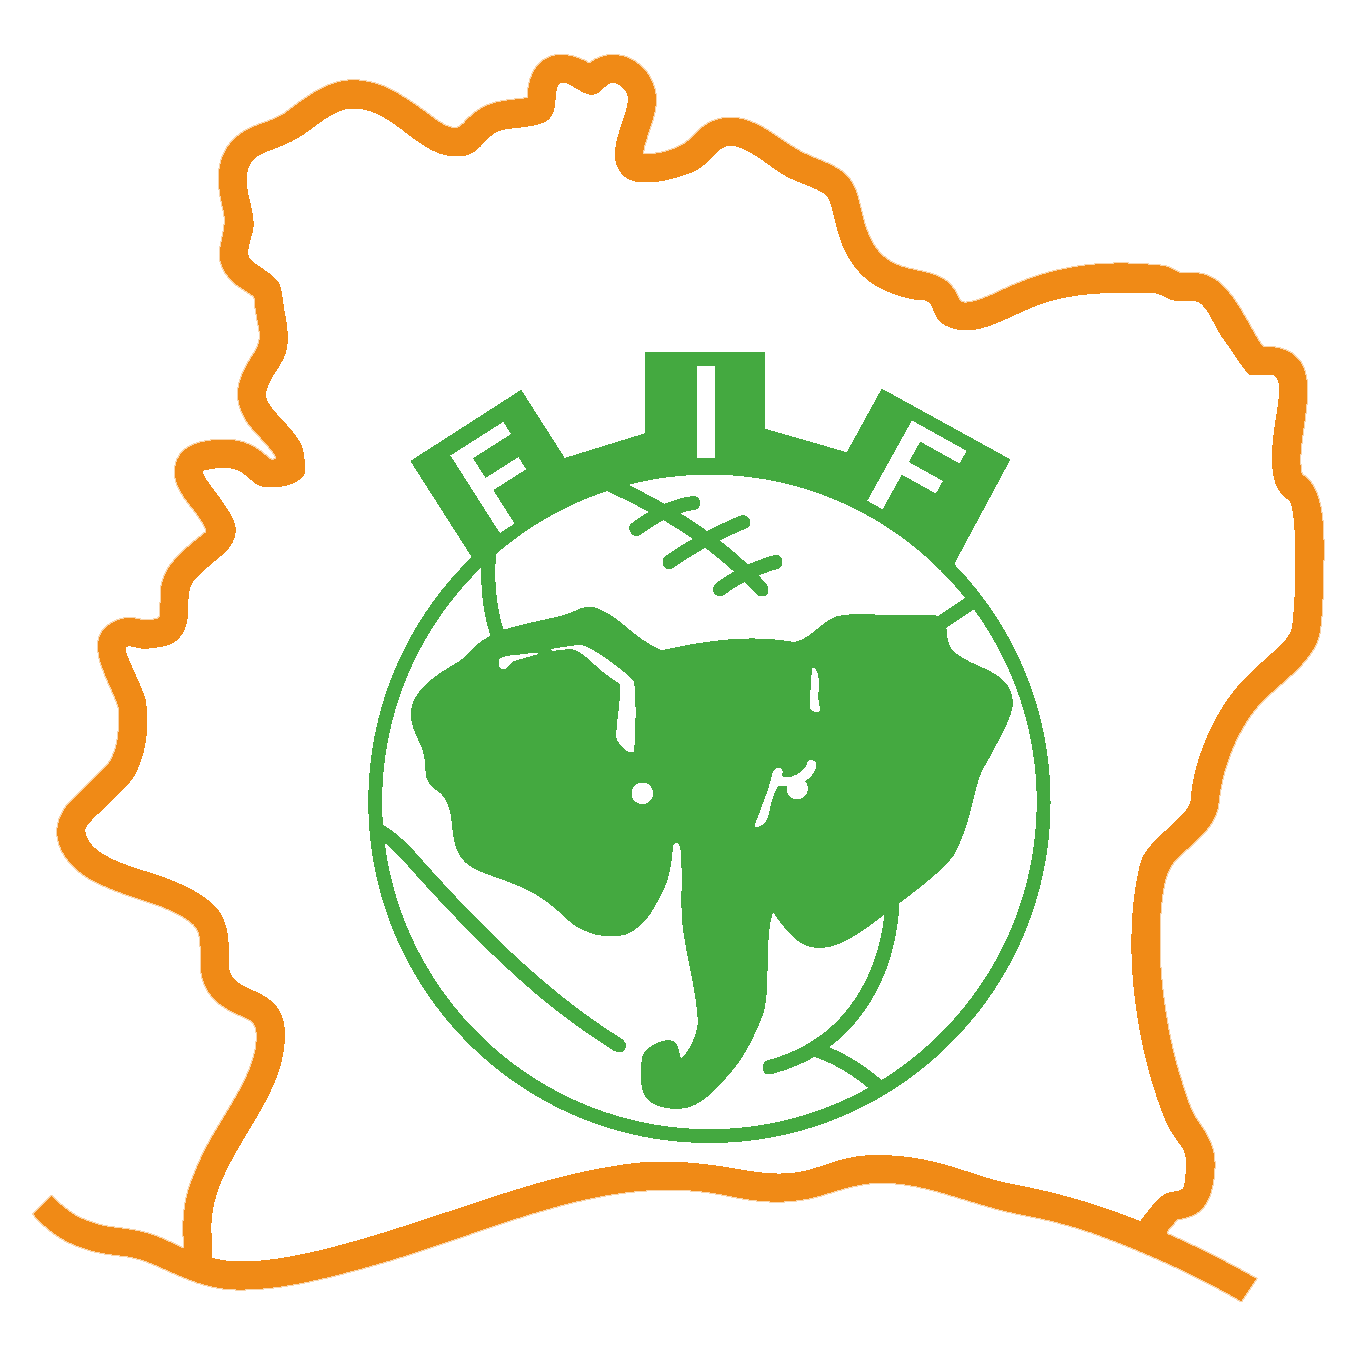 Federation Ivoirienne de Football & Cute dIvoire National Team Logo png